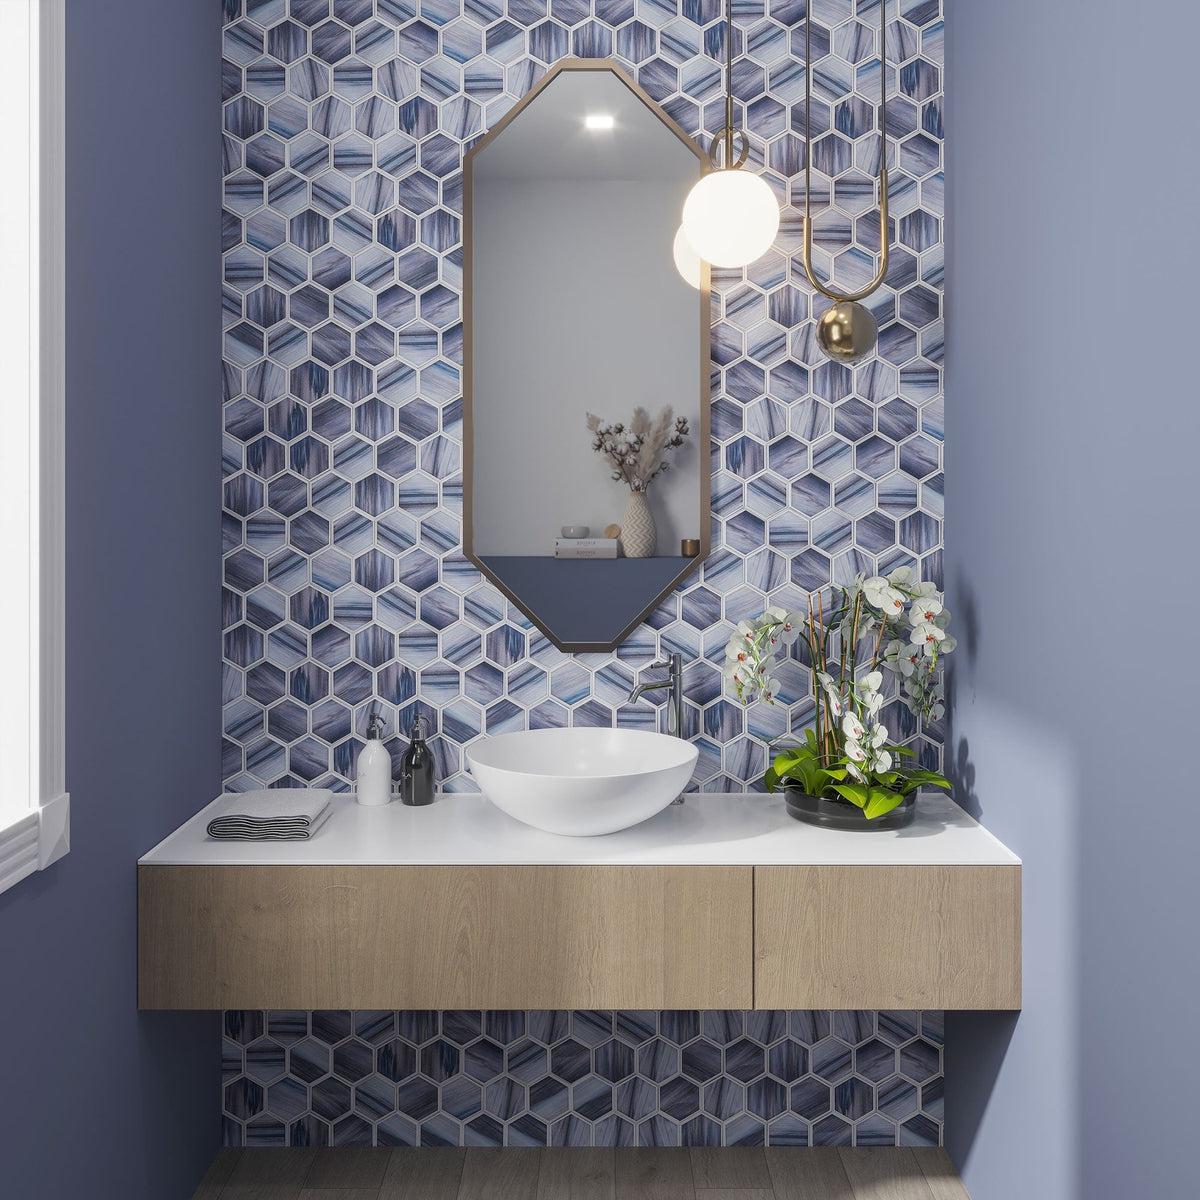 Modern bathroom design with blue hexagon glass tile backsplash